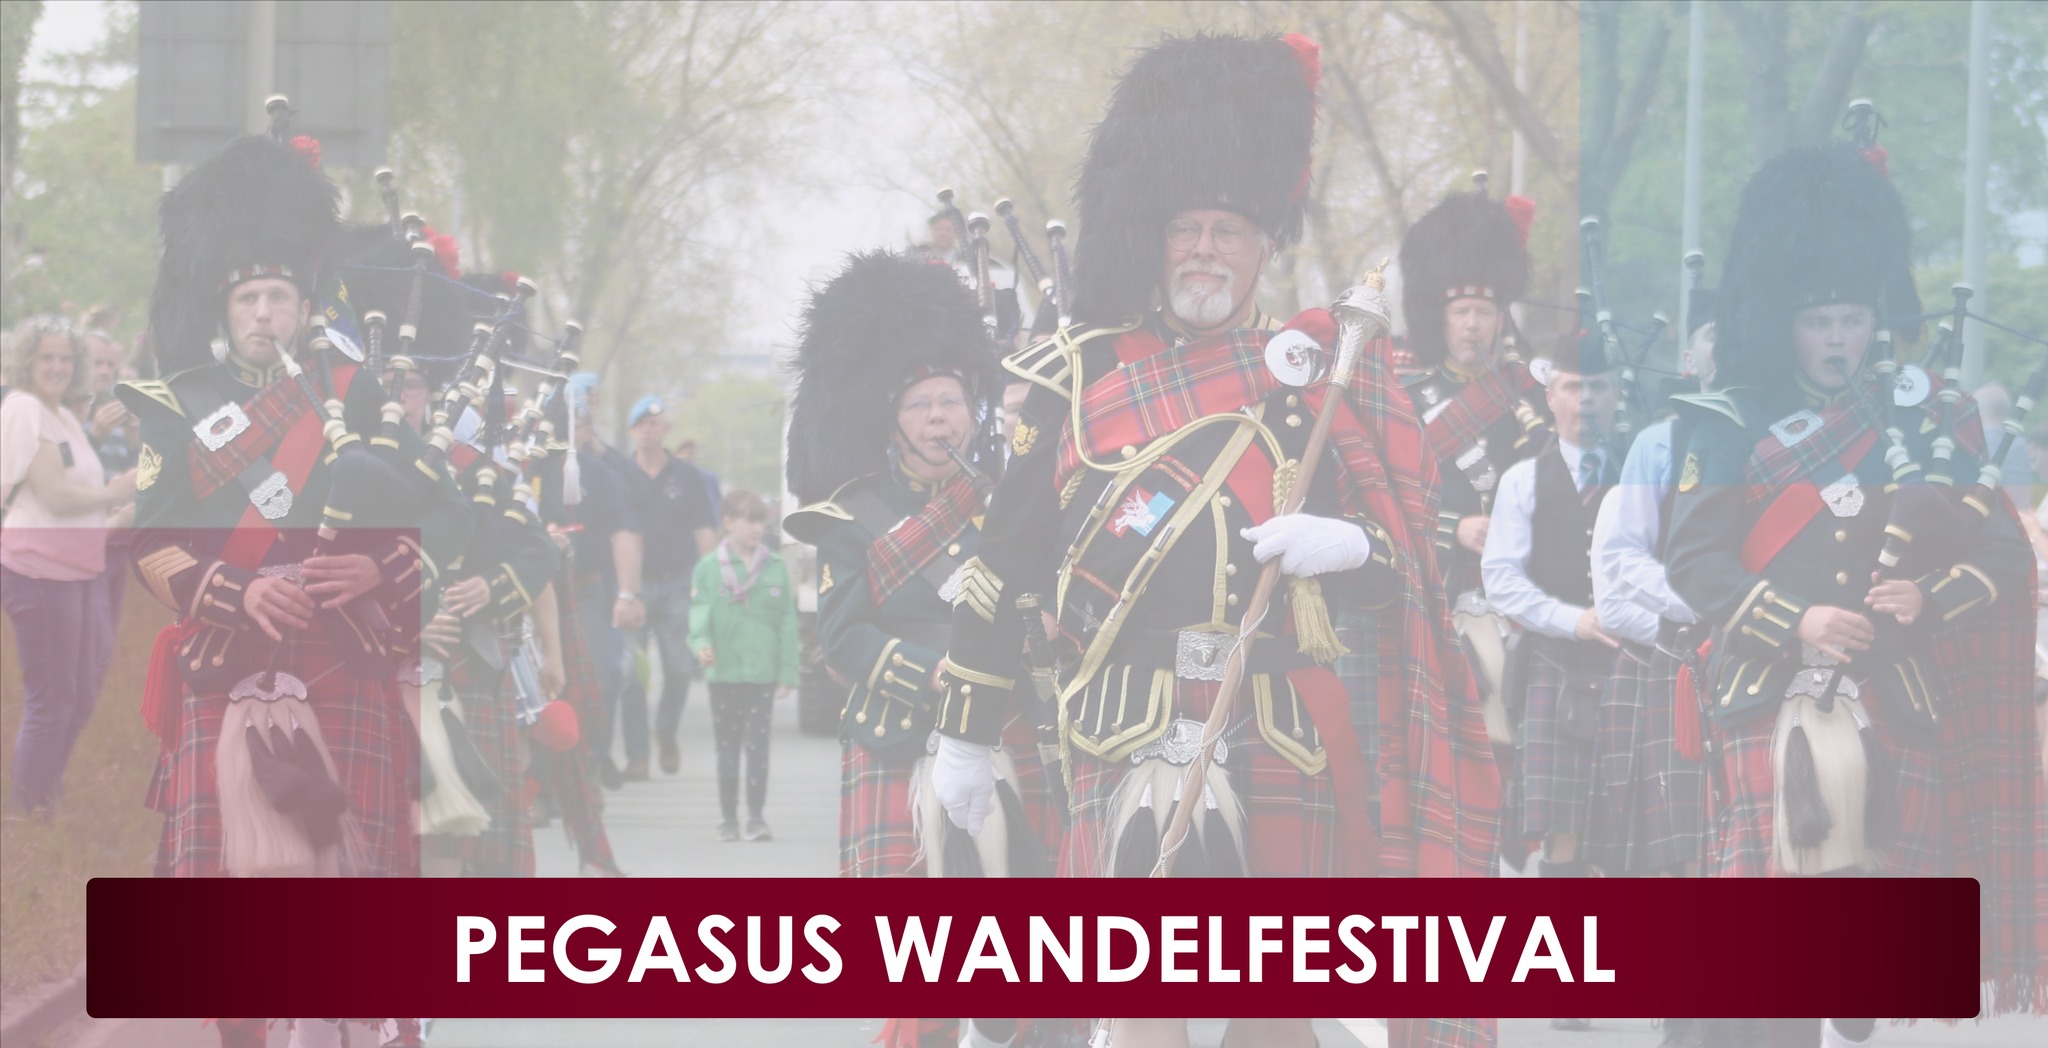 Pegasus Wandelfestival